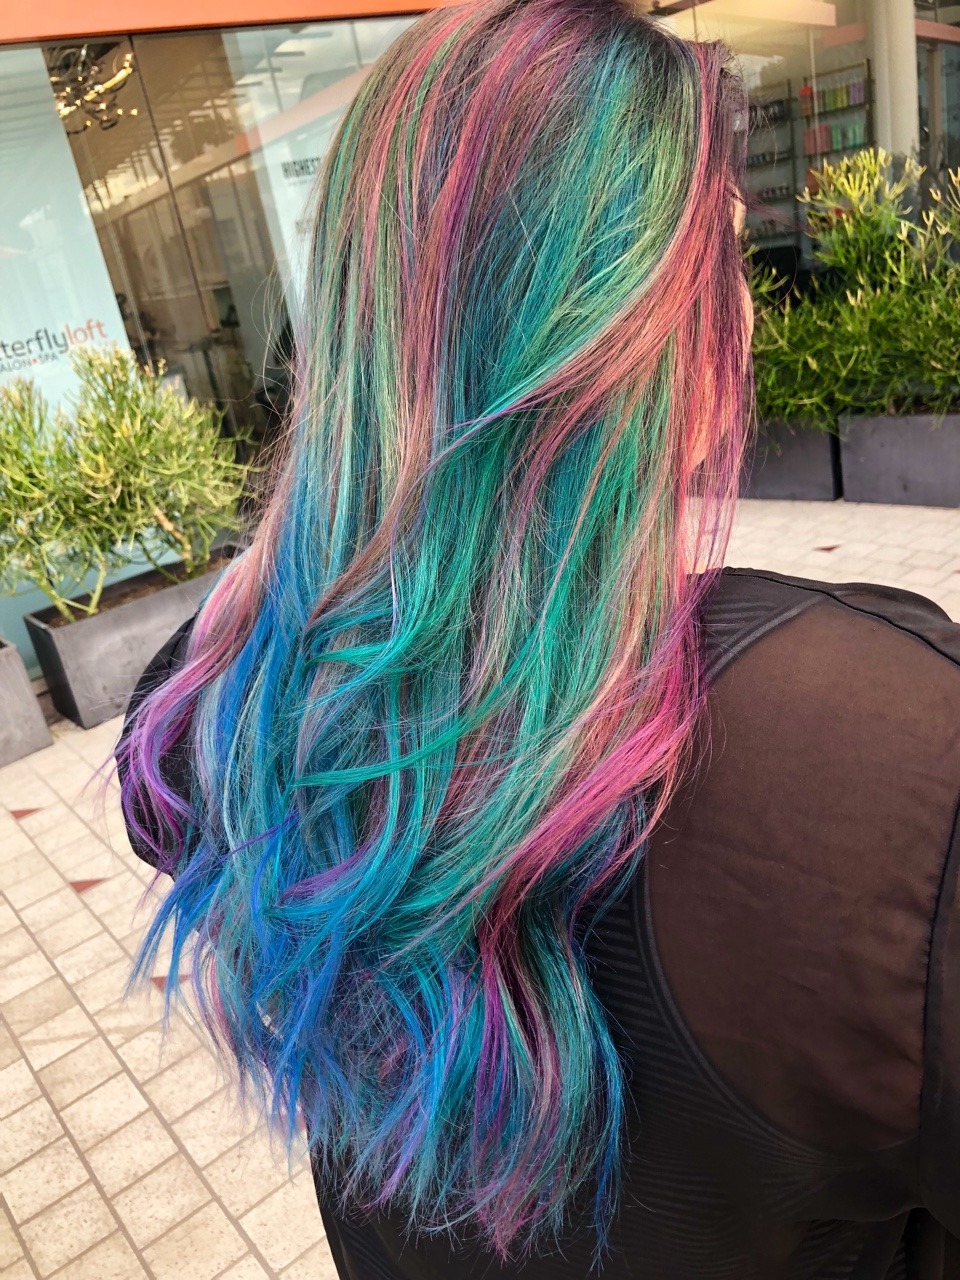 Hair colors on Tumblr